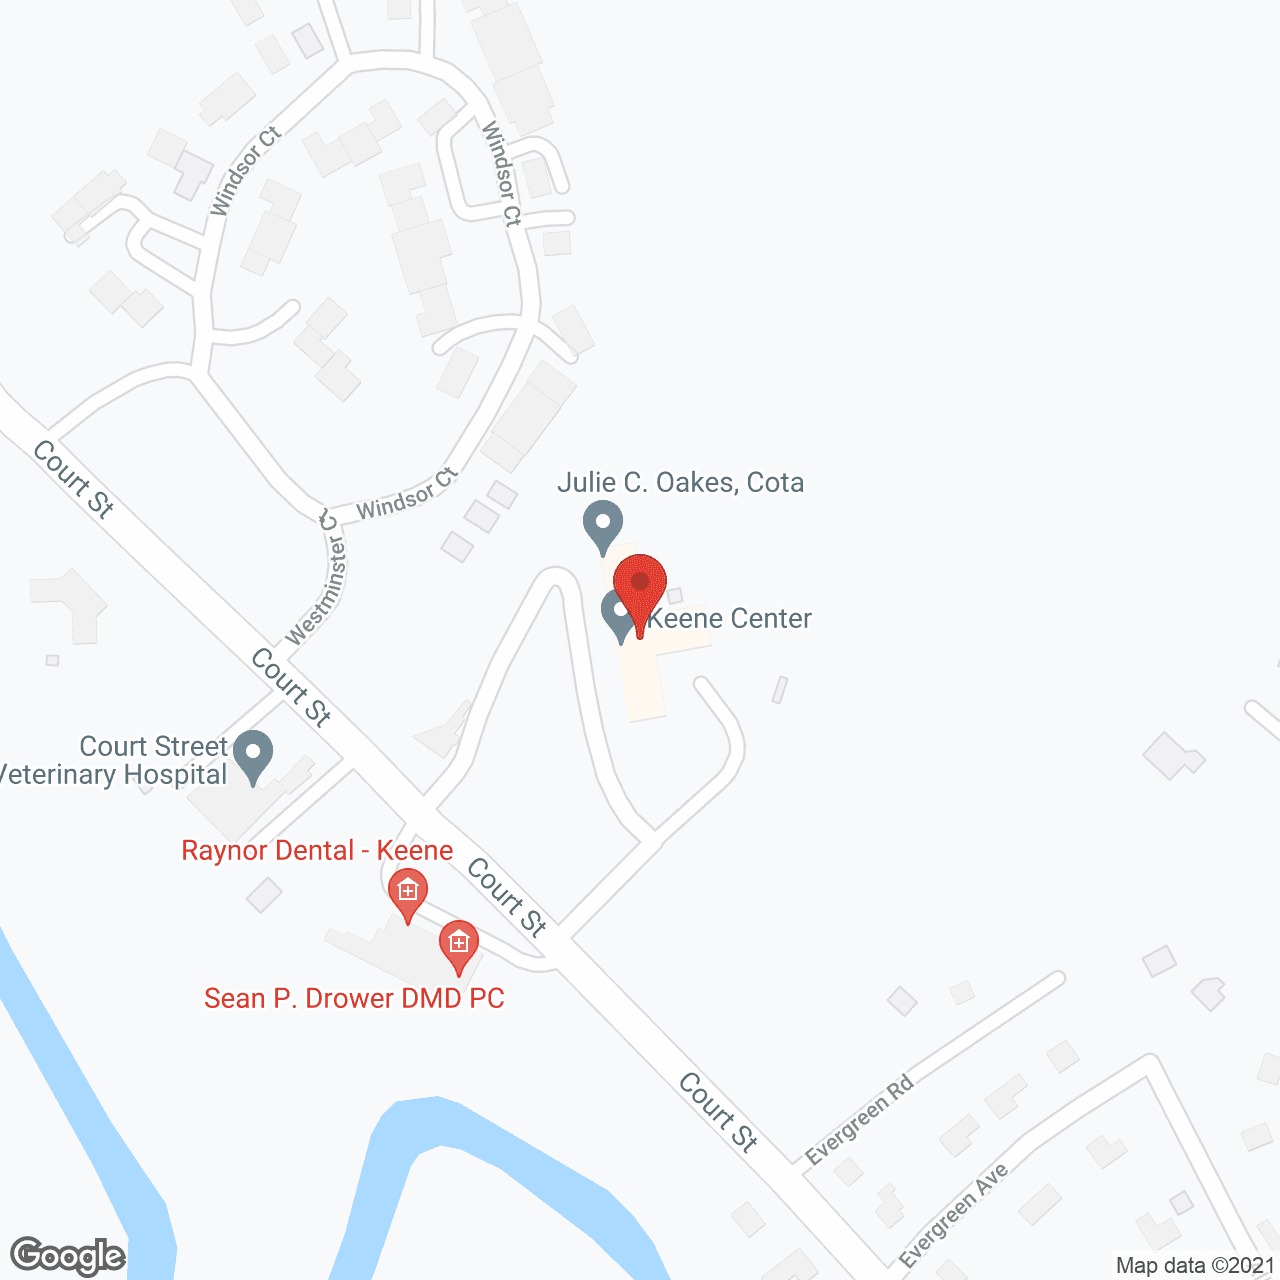 Keene Center in google map